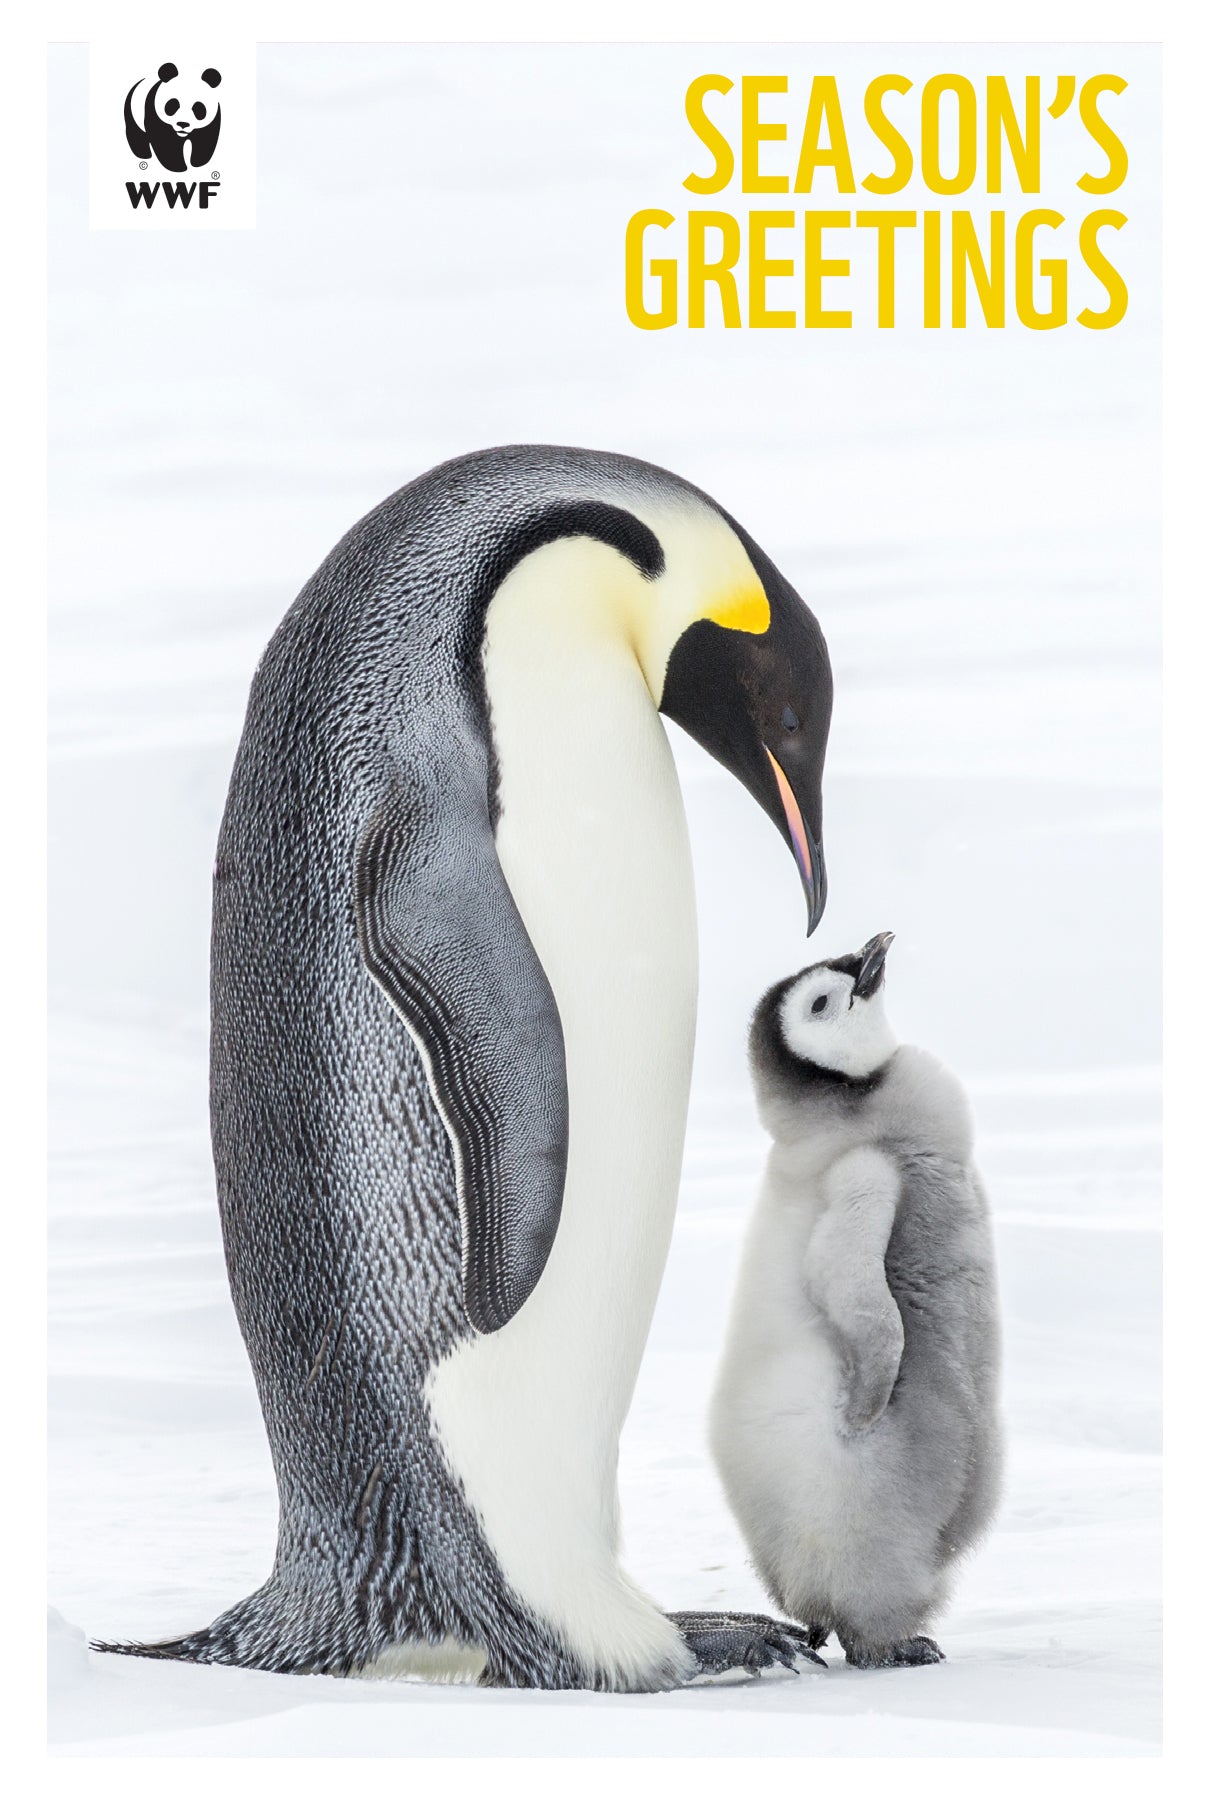 WWF-Canada Holiday Greeting Cards - emperor penguin image. "Season's greetings"